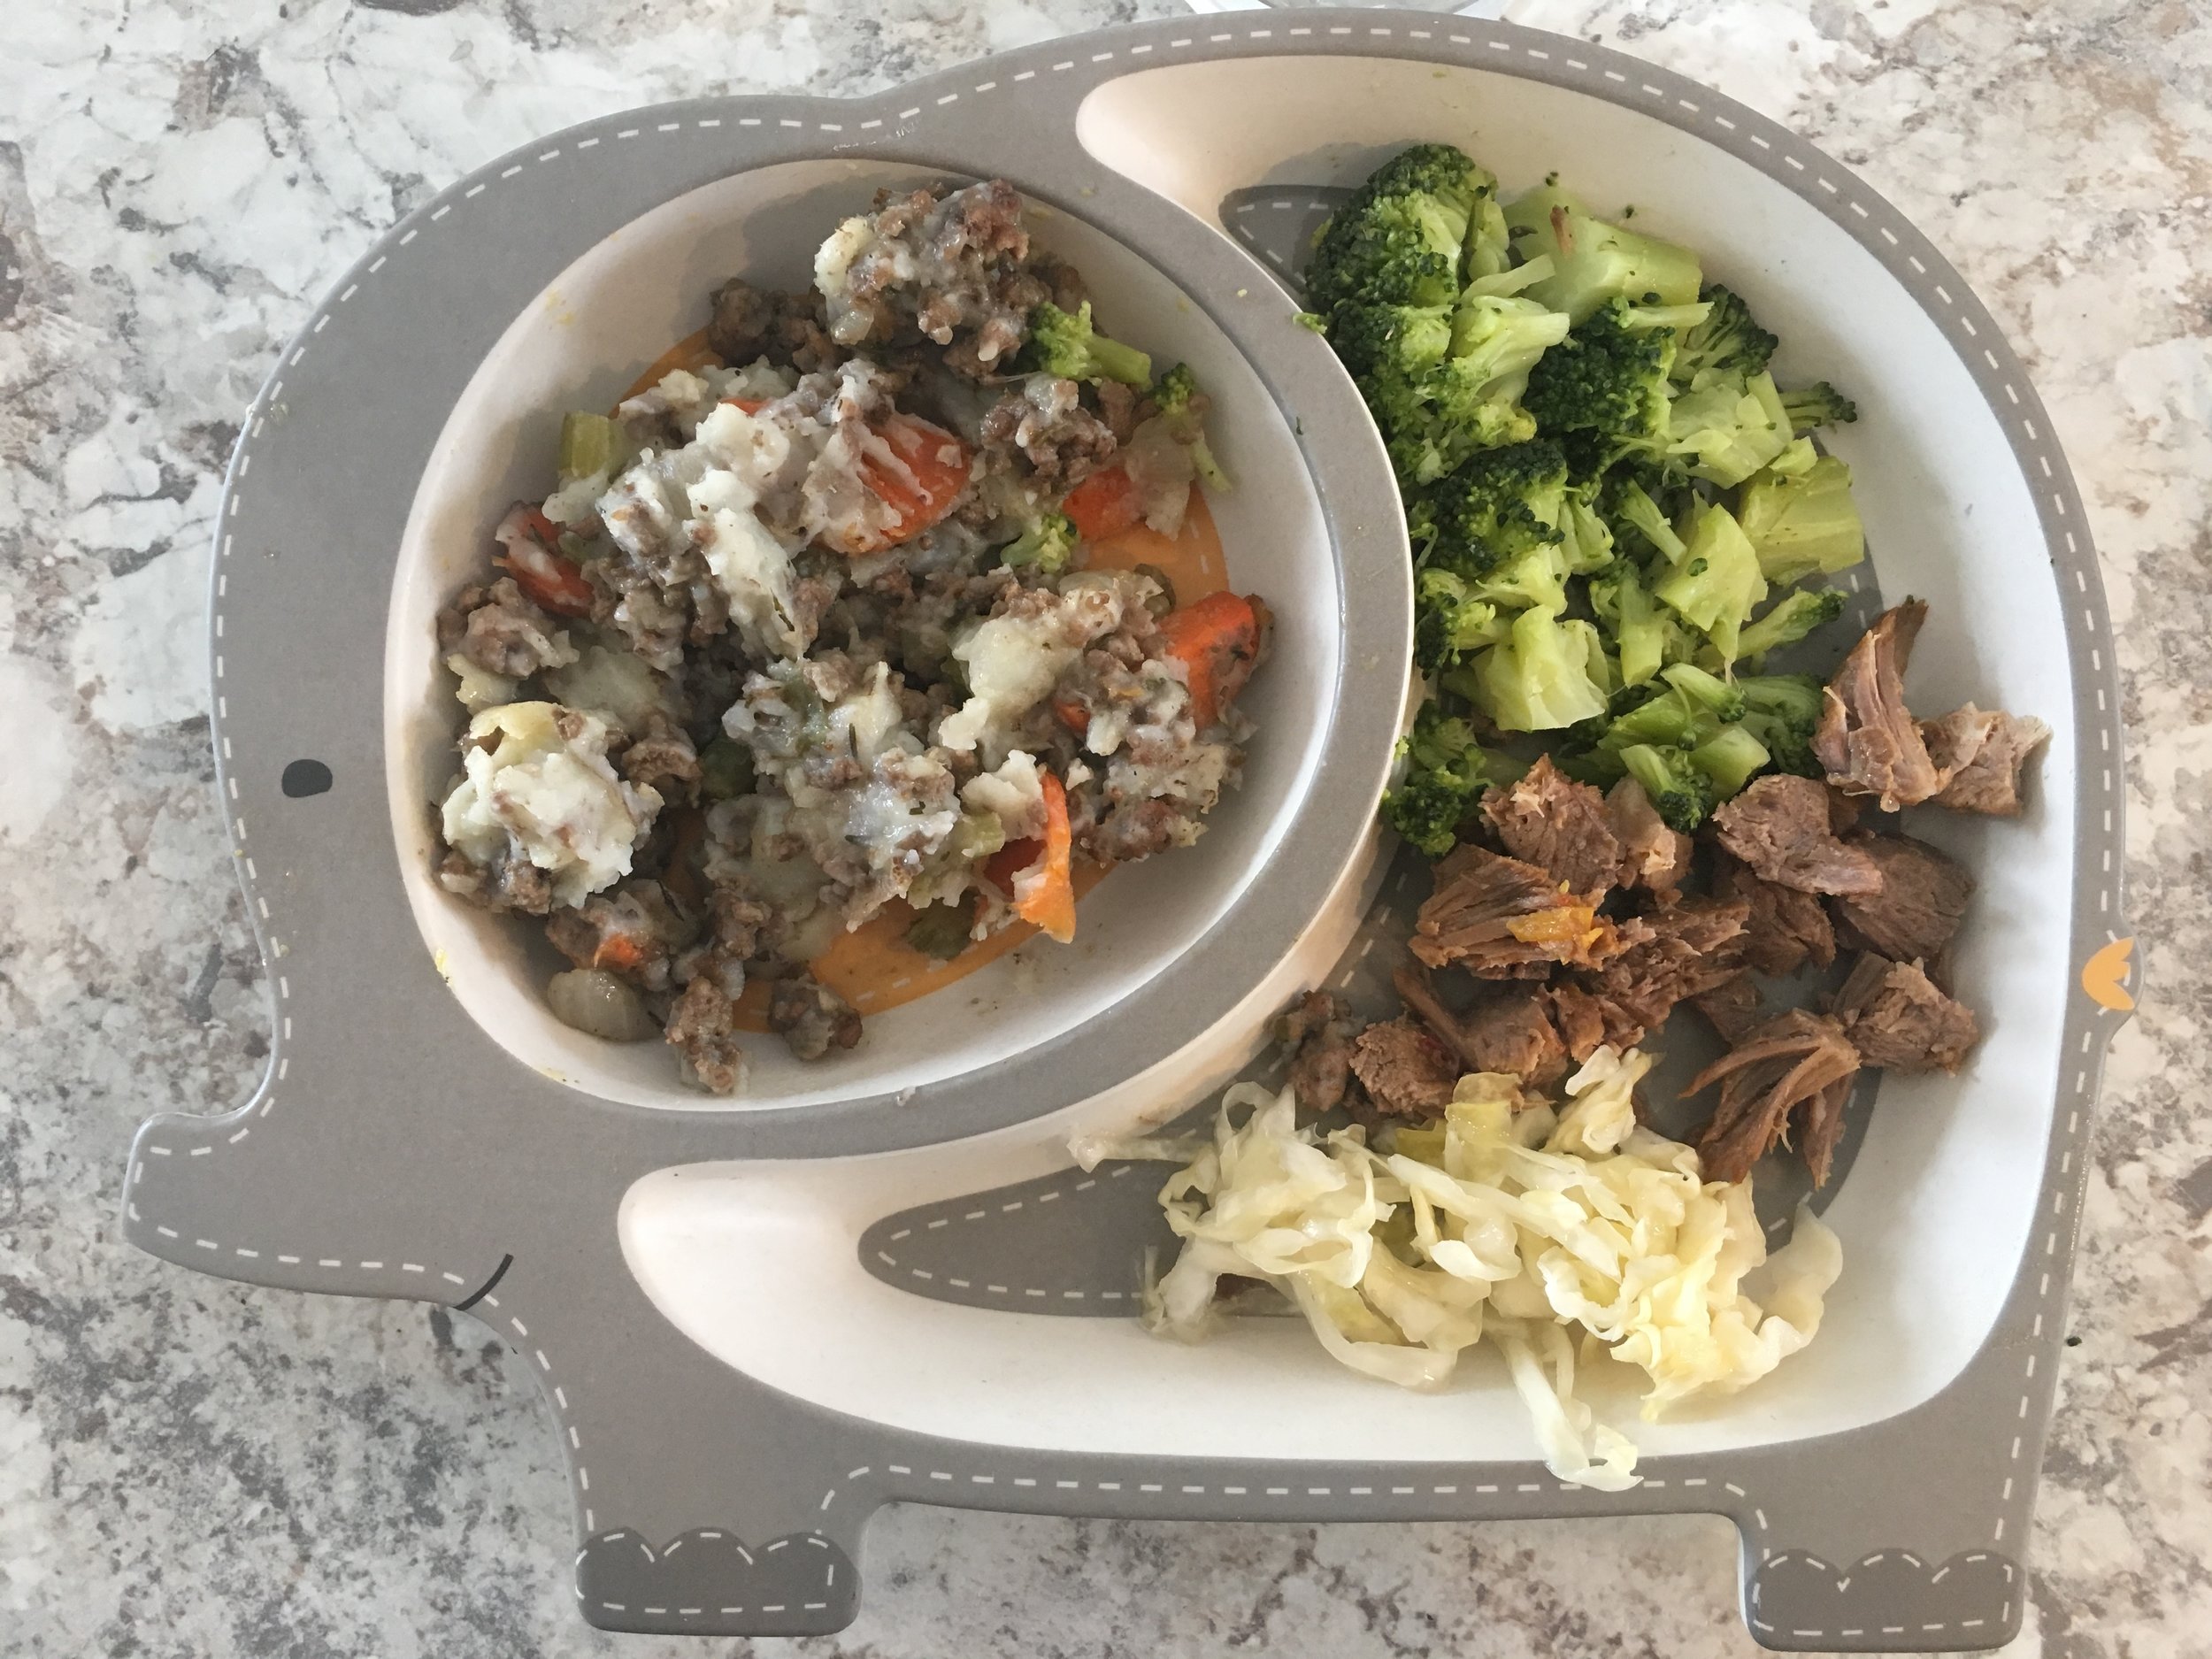 Shepherd's pie, broccoli, sauerkraut, and a little roast